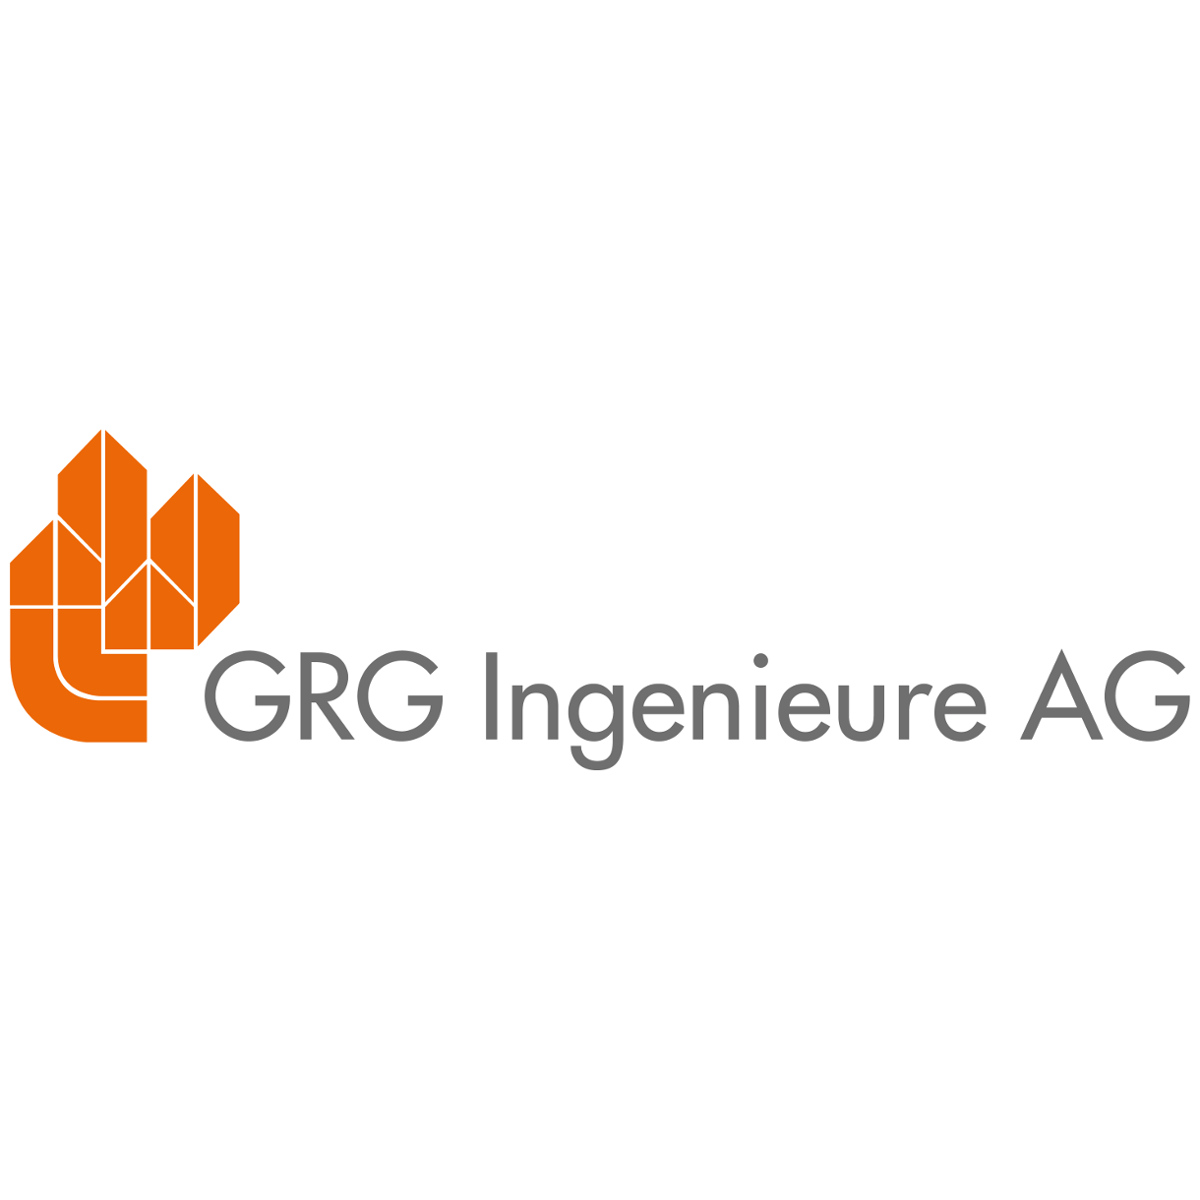 GRG Ingenieure AG